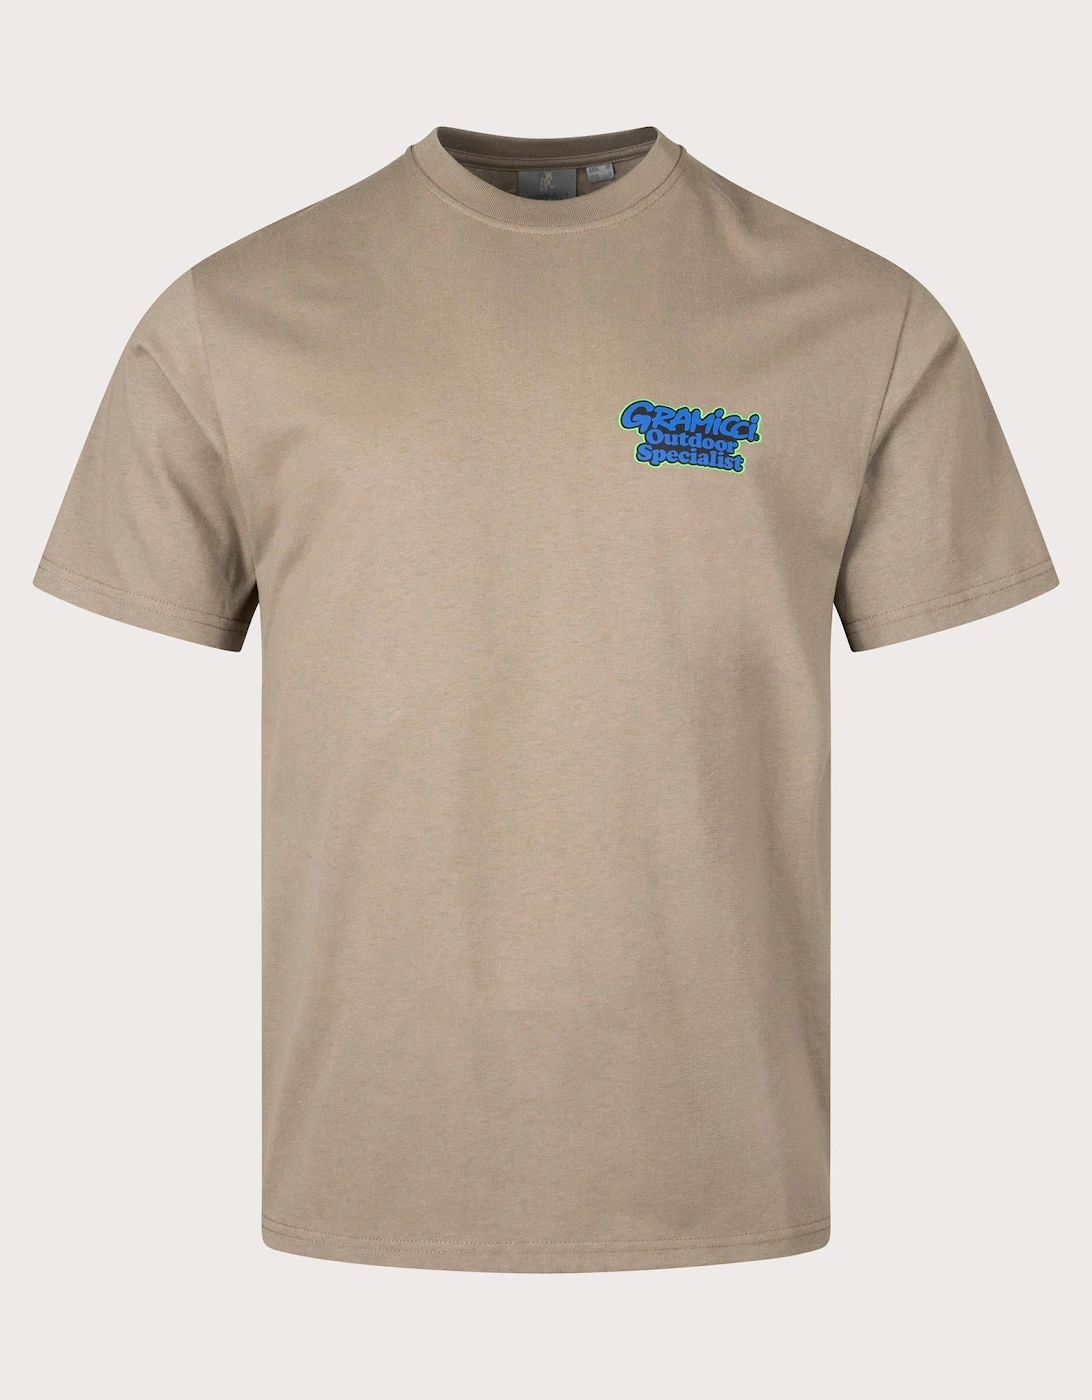 Outdoor Specialist T-Shirt